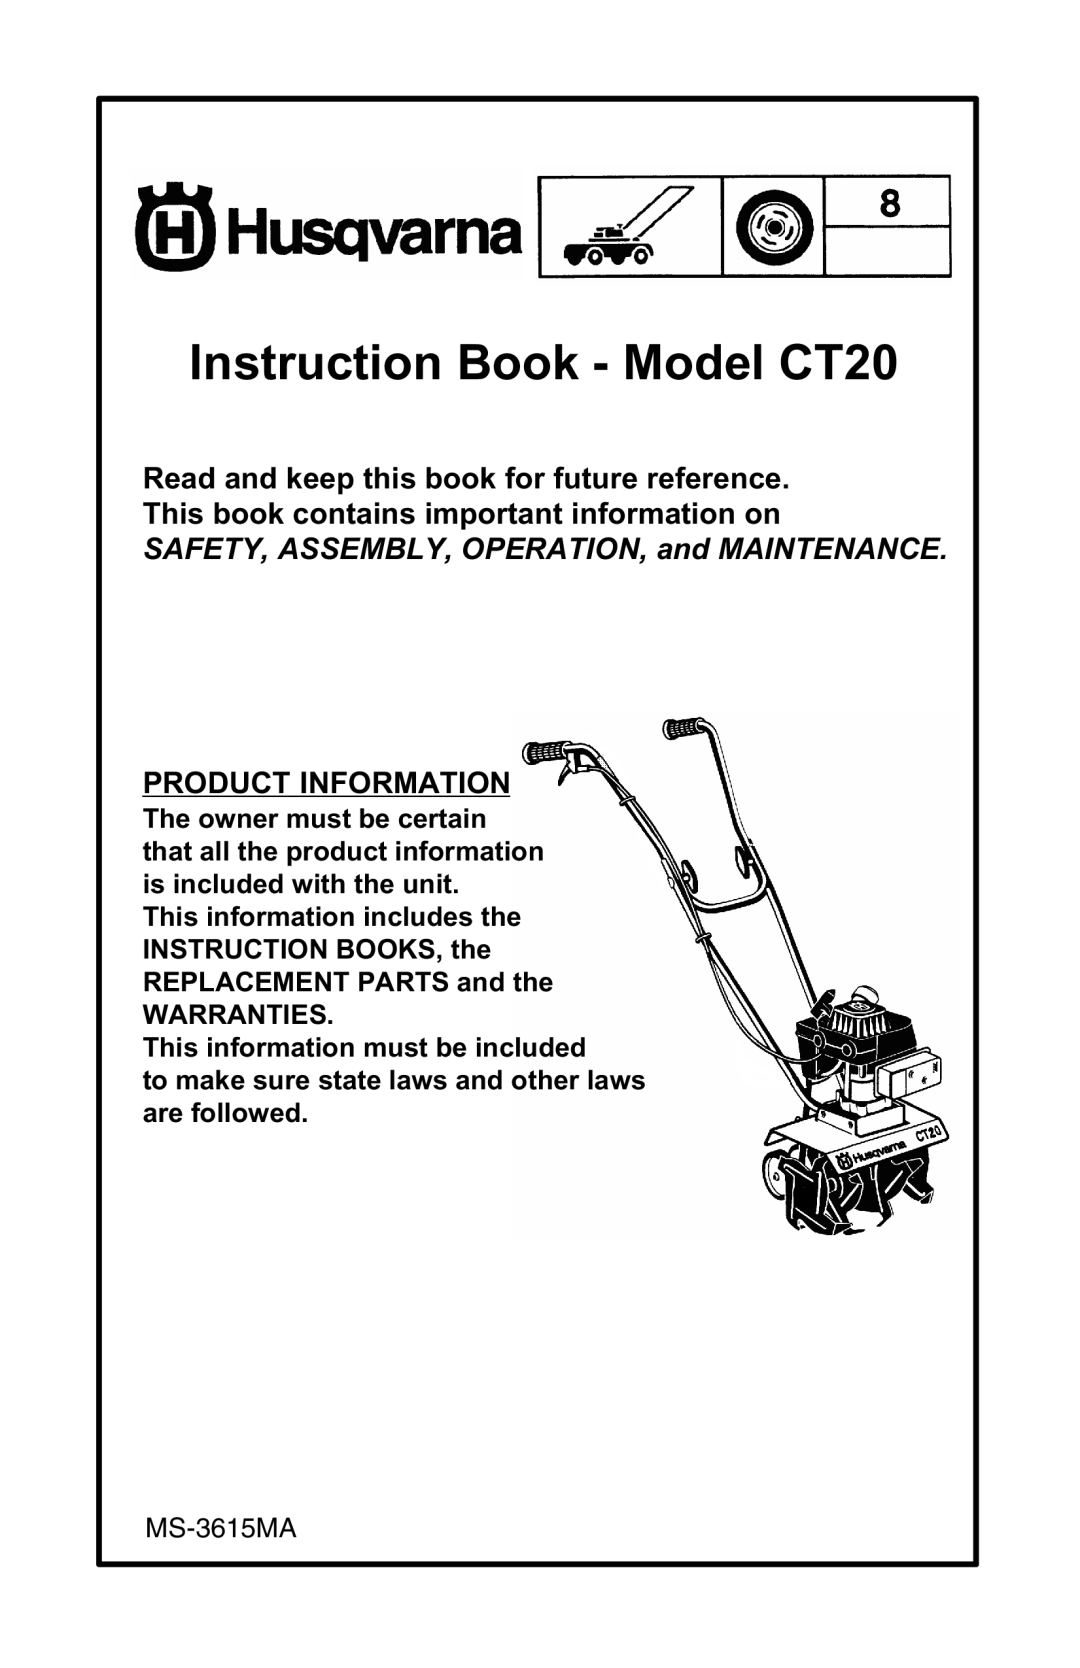 Husqvarna manual Instruction Book - Model CT20, Product Information 